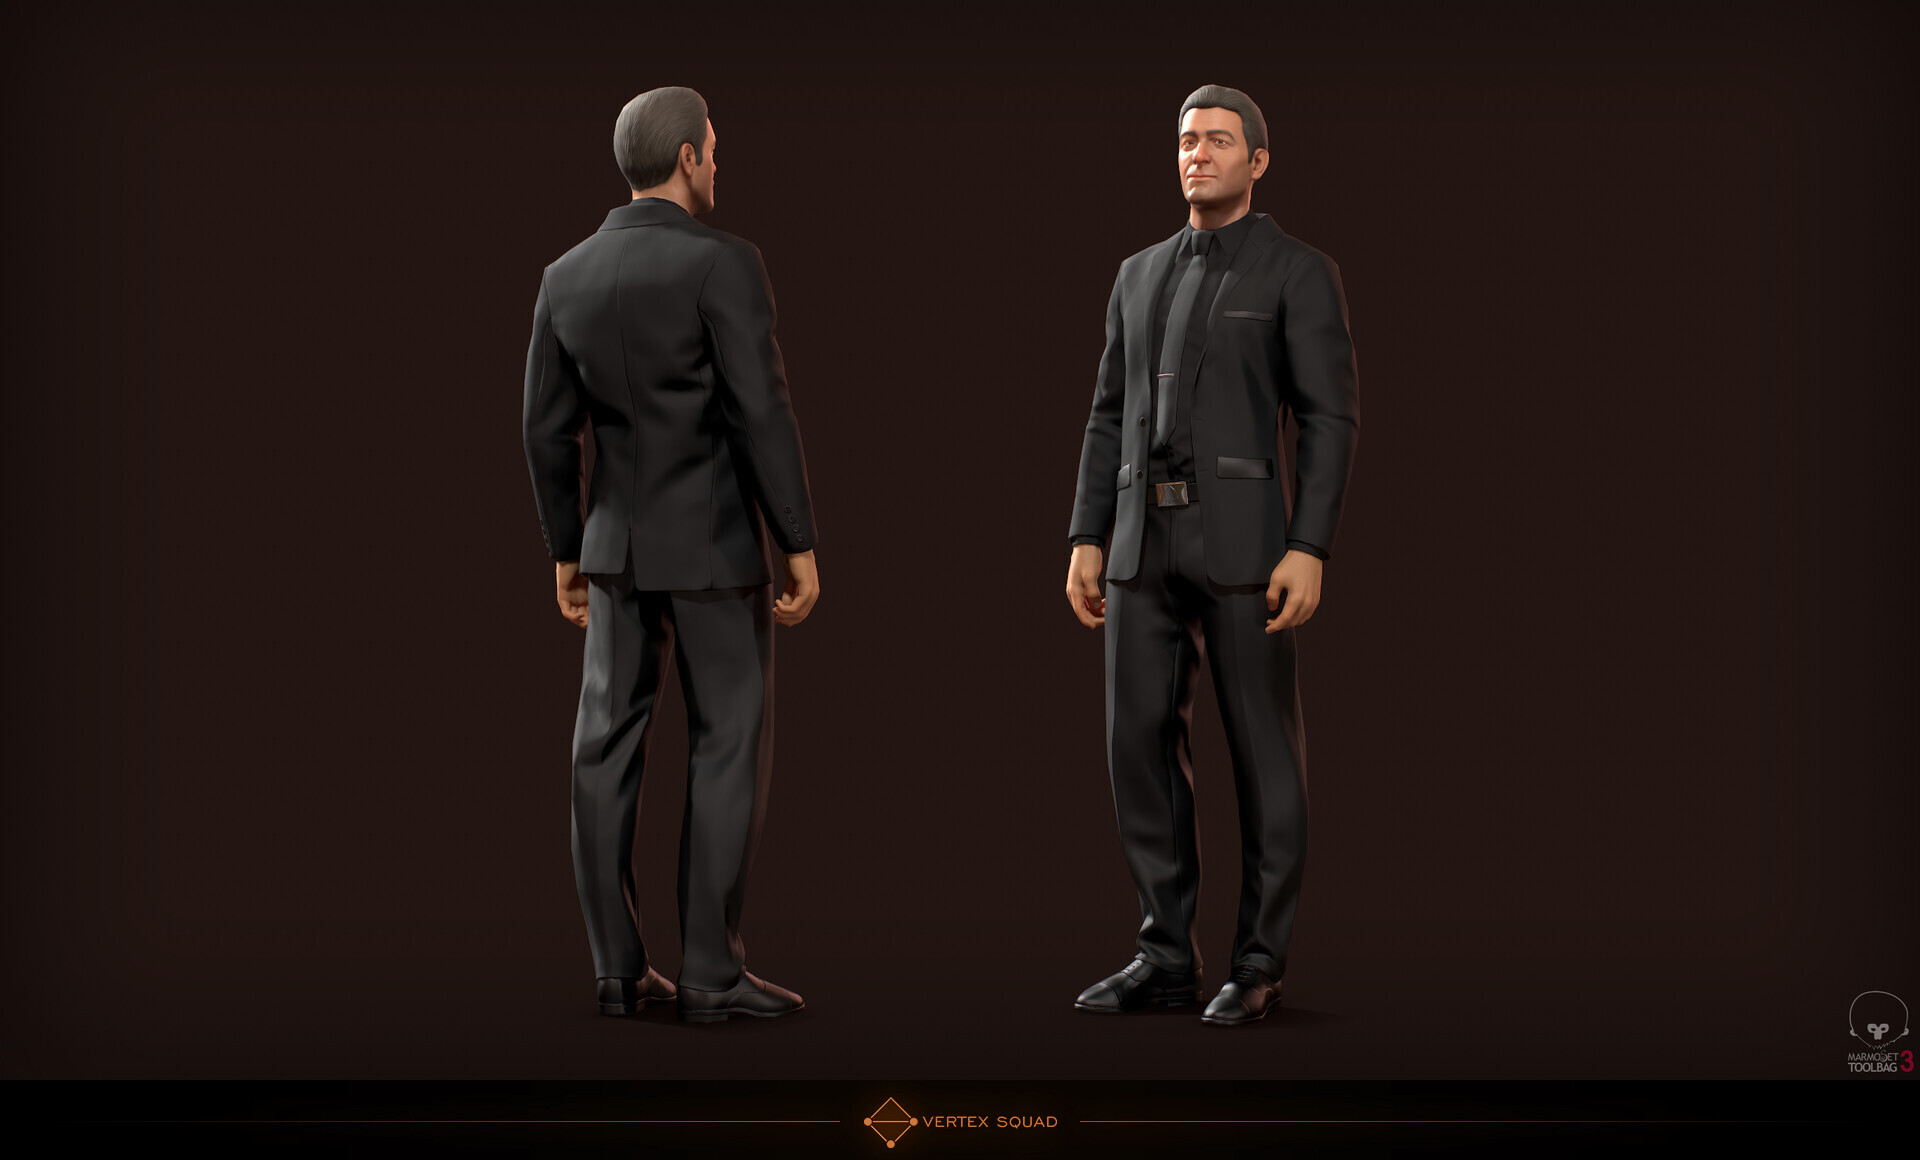 ArtStation - Guy in the suit